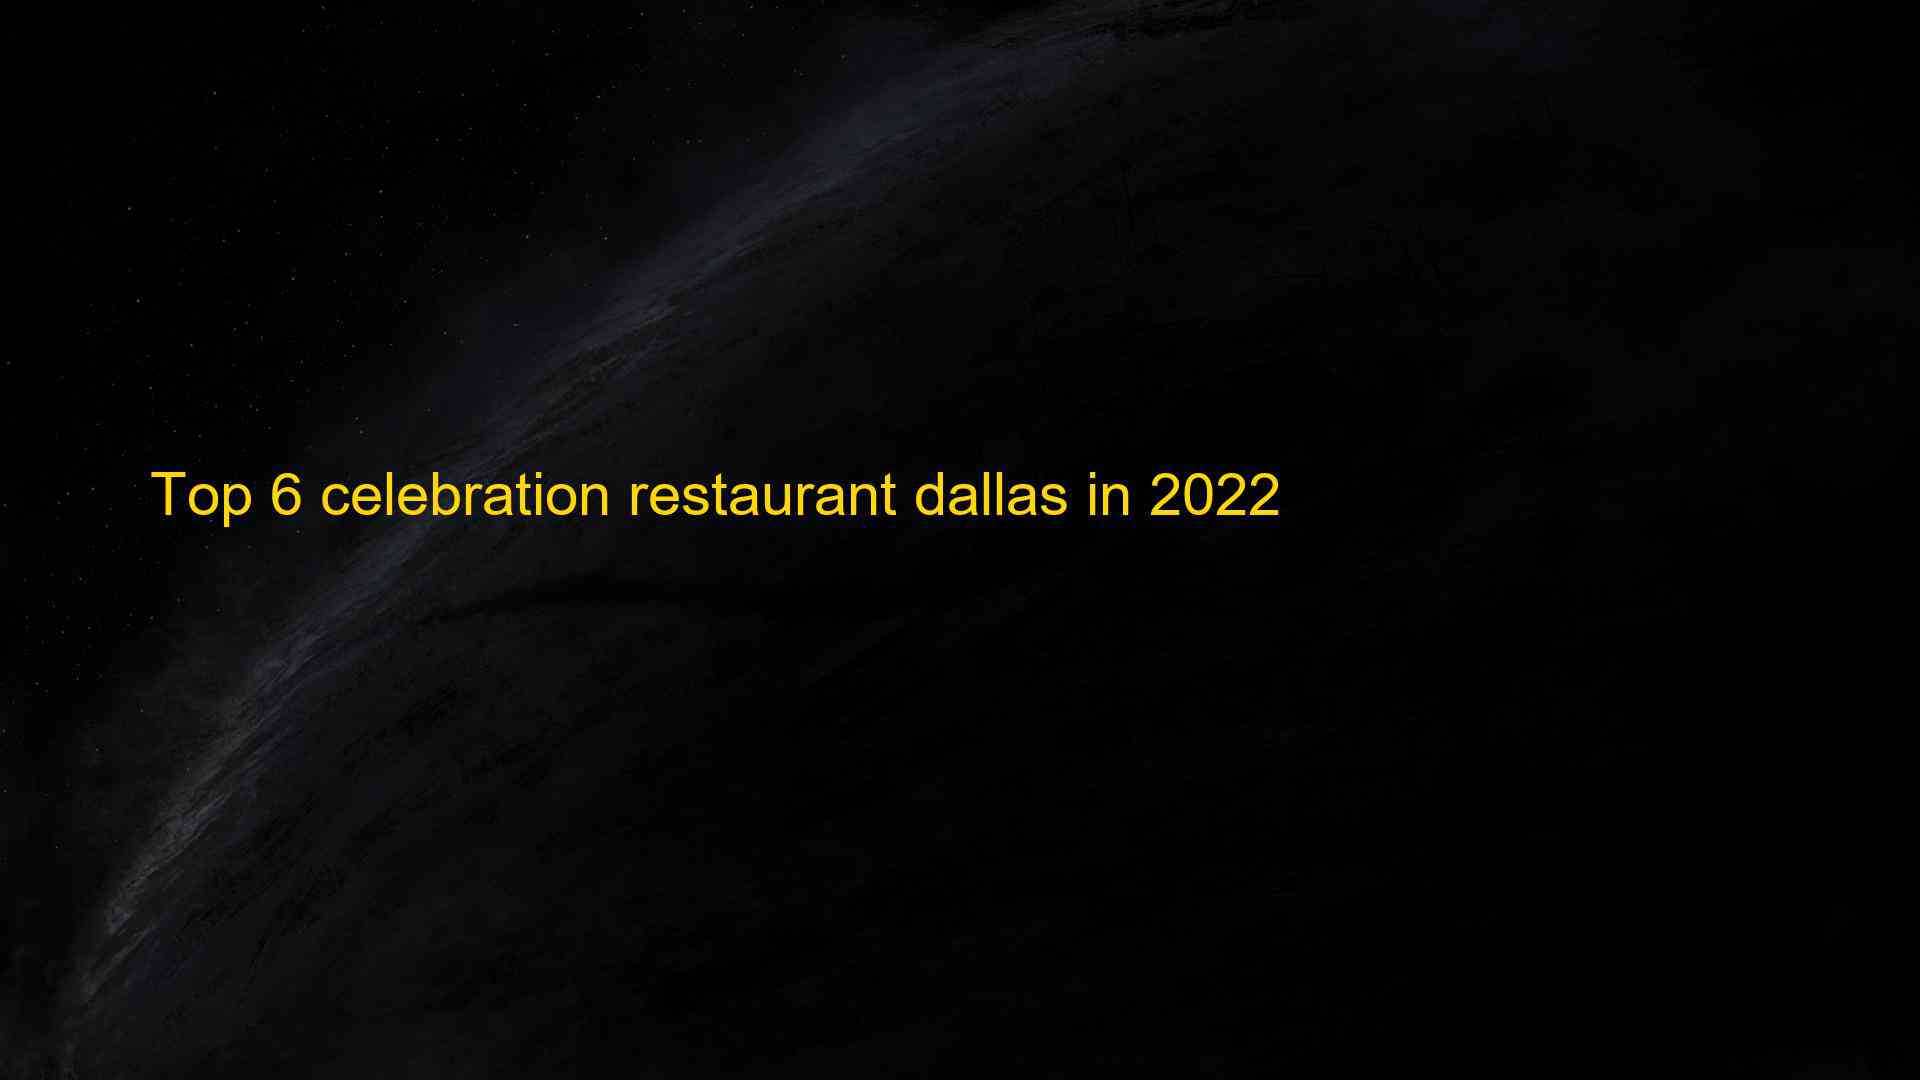 Top 6 celebration restaurant dallas in 2022 1663002655